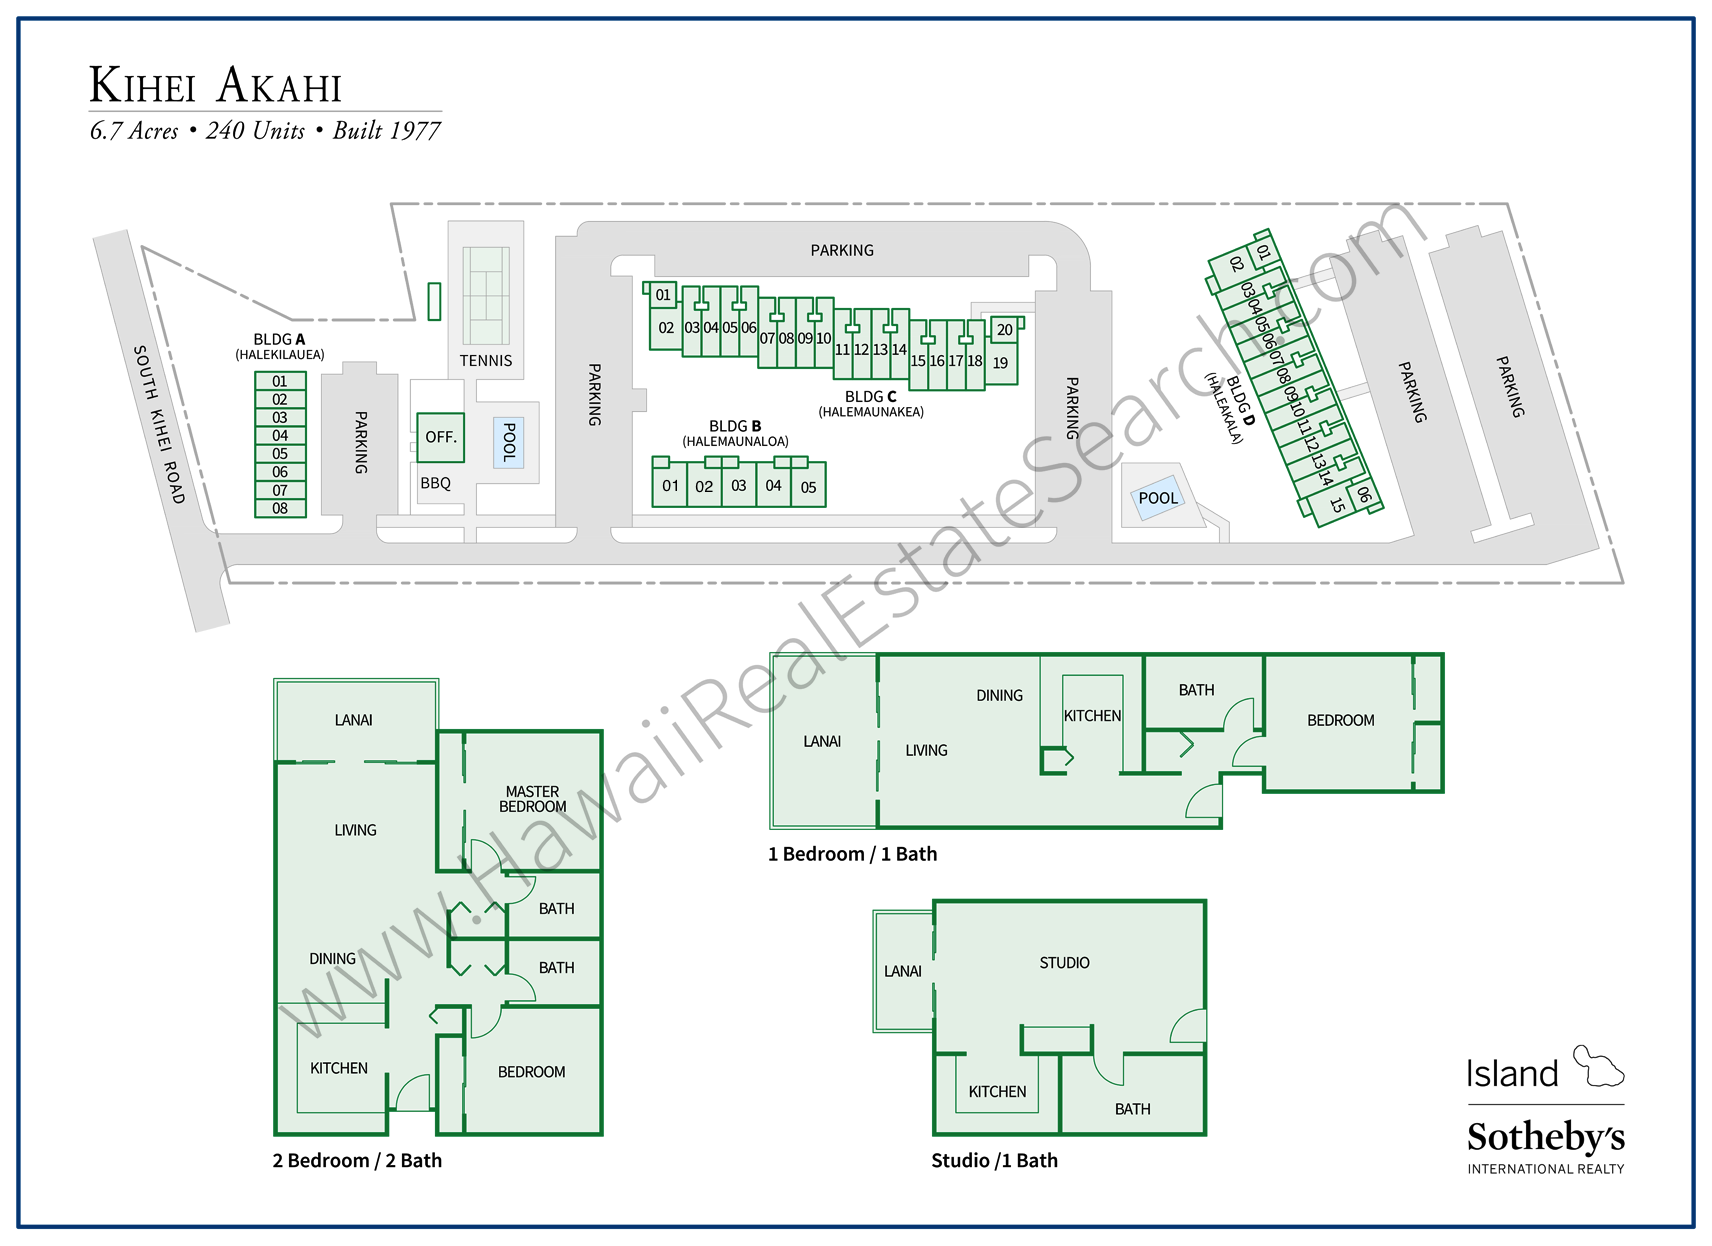 kihei akahi map and floor plans